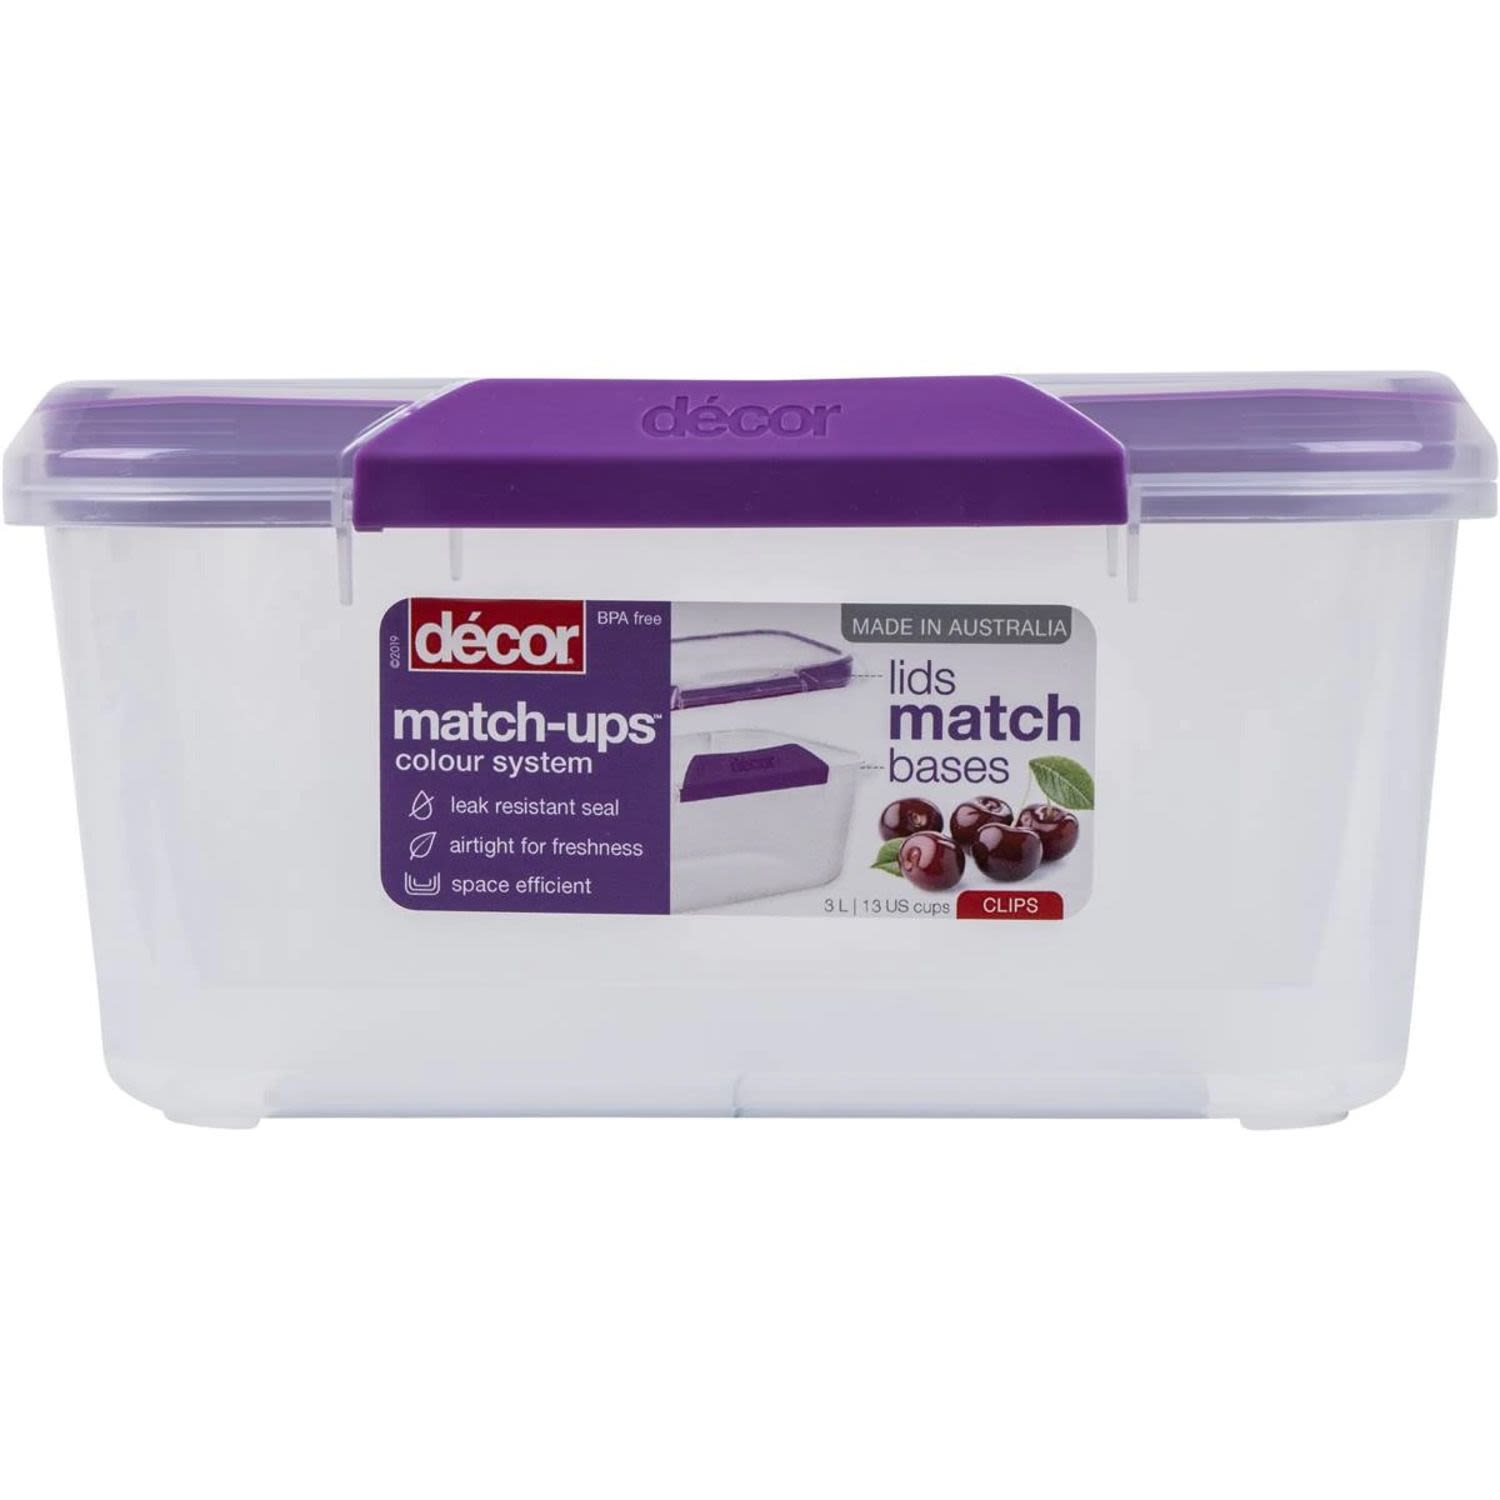 Decor Match-Ups Oblong Container 3L, 1 Each